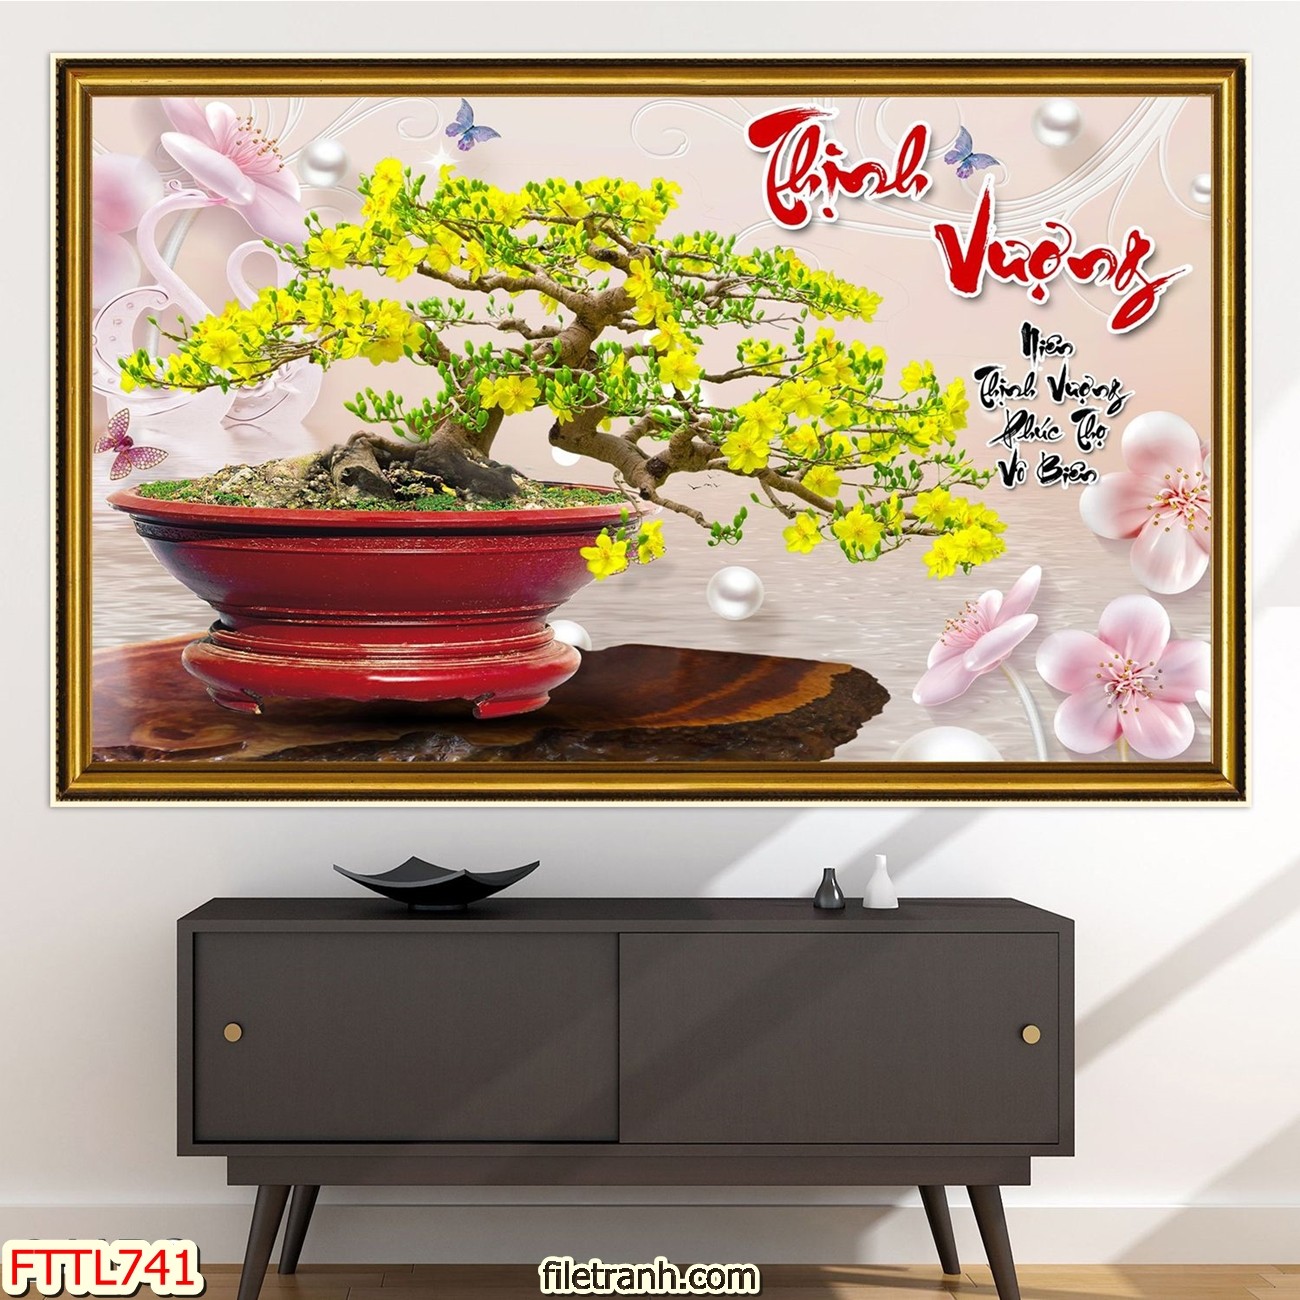 https://filetranh.com/file-tranh-chau-mai-bonsai/file-tranh-chau-mai-bonsai-fttl741.html